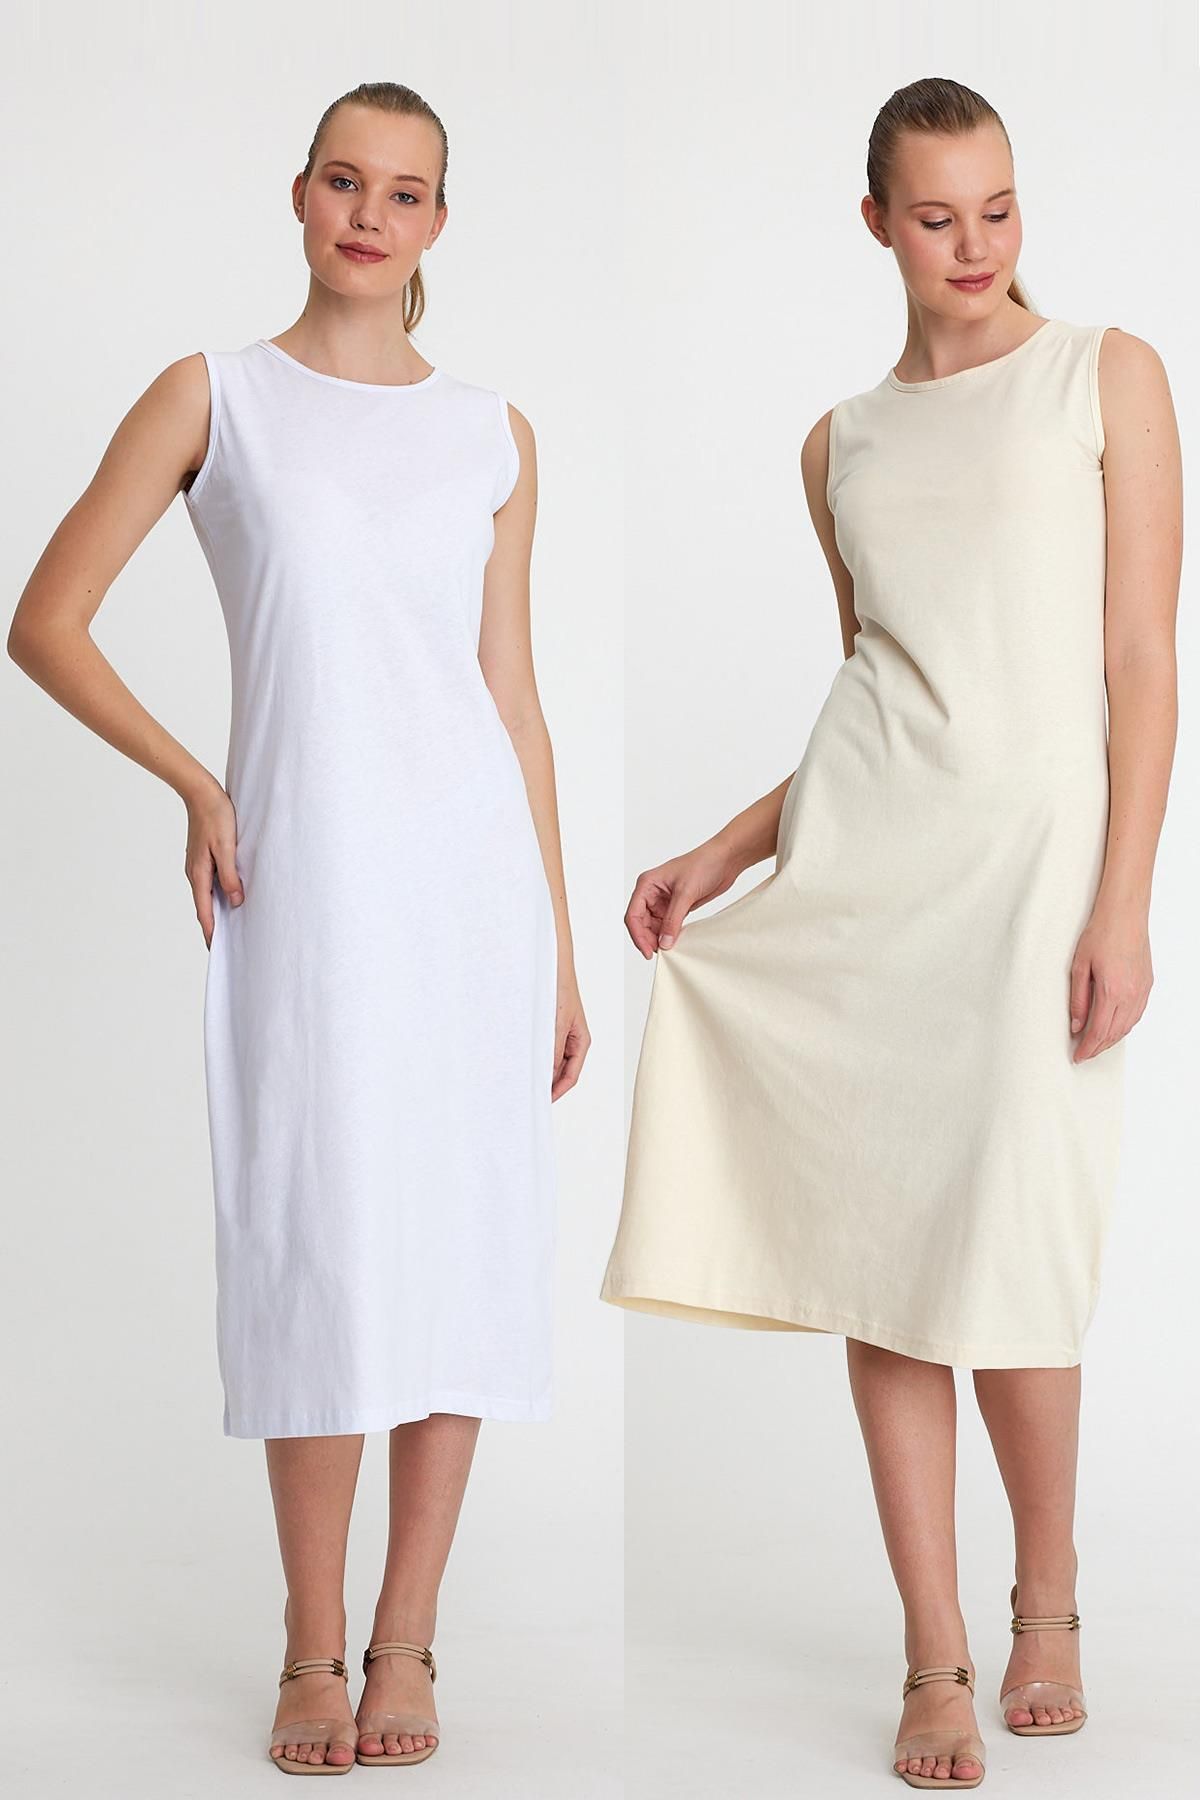 ESPİNA Uzun Kolsuz Elbise Astarı Içlik Jüpon Kombinezon 2'li Set Ekru - Beyaz 2'li Set